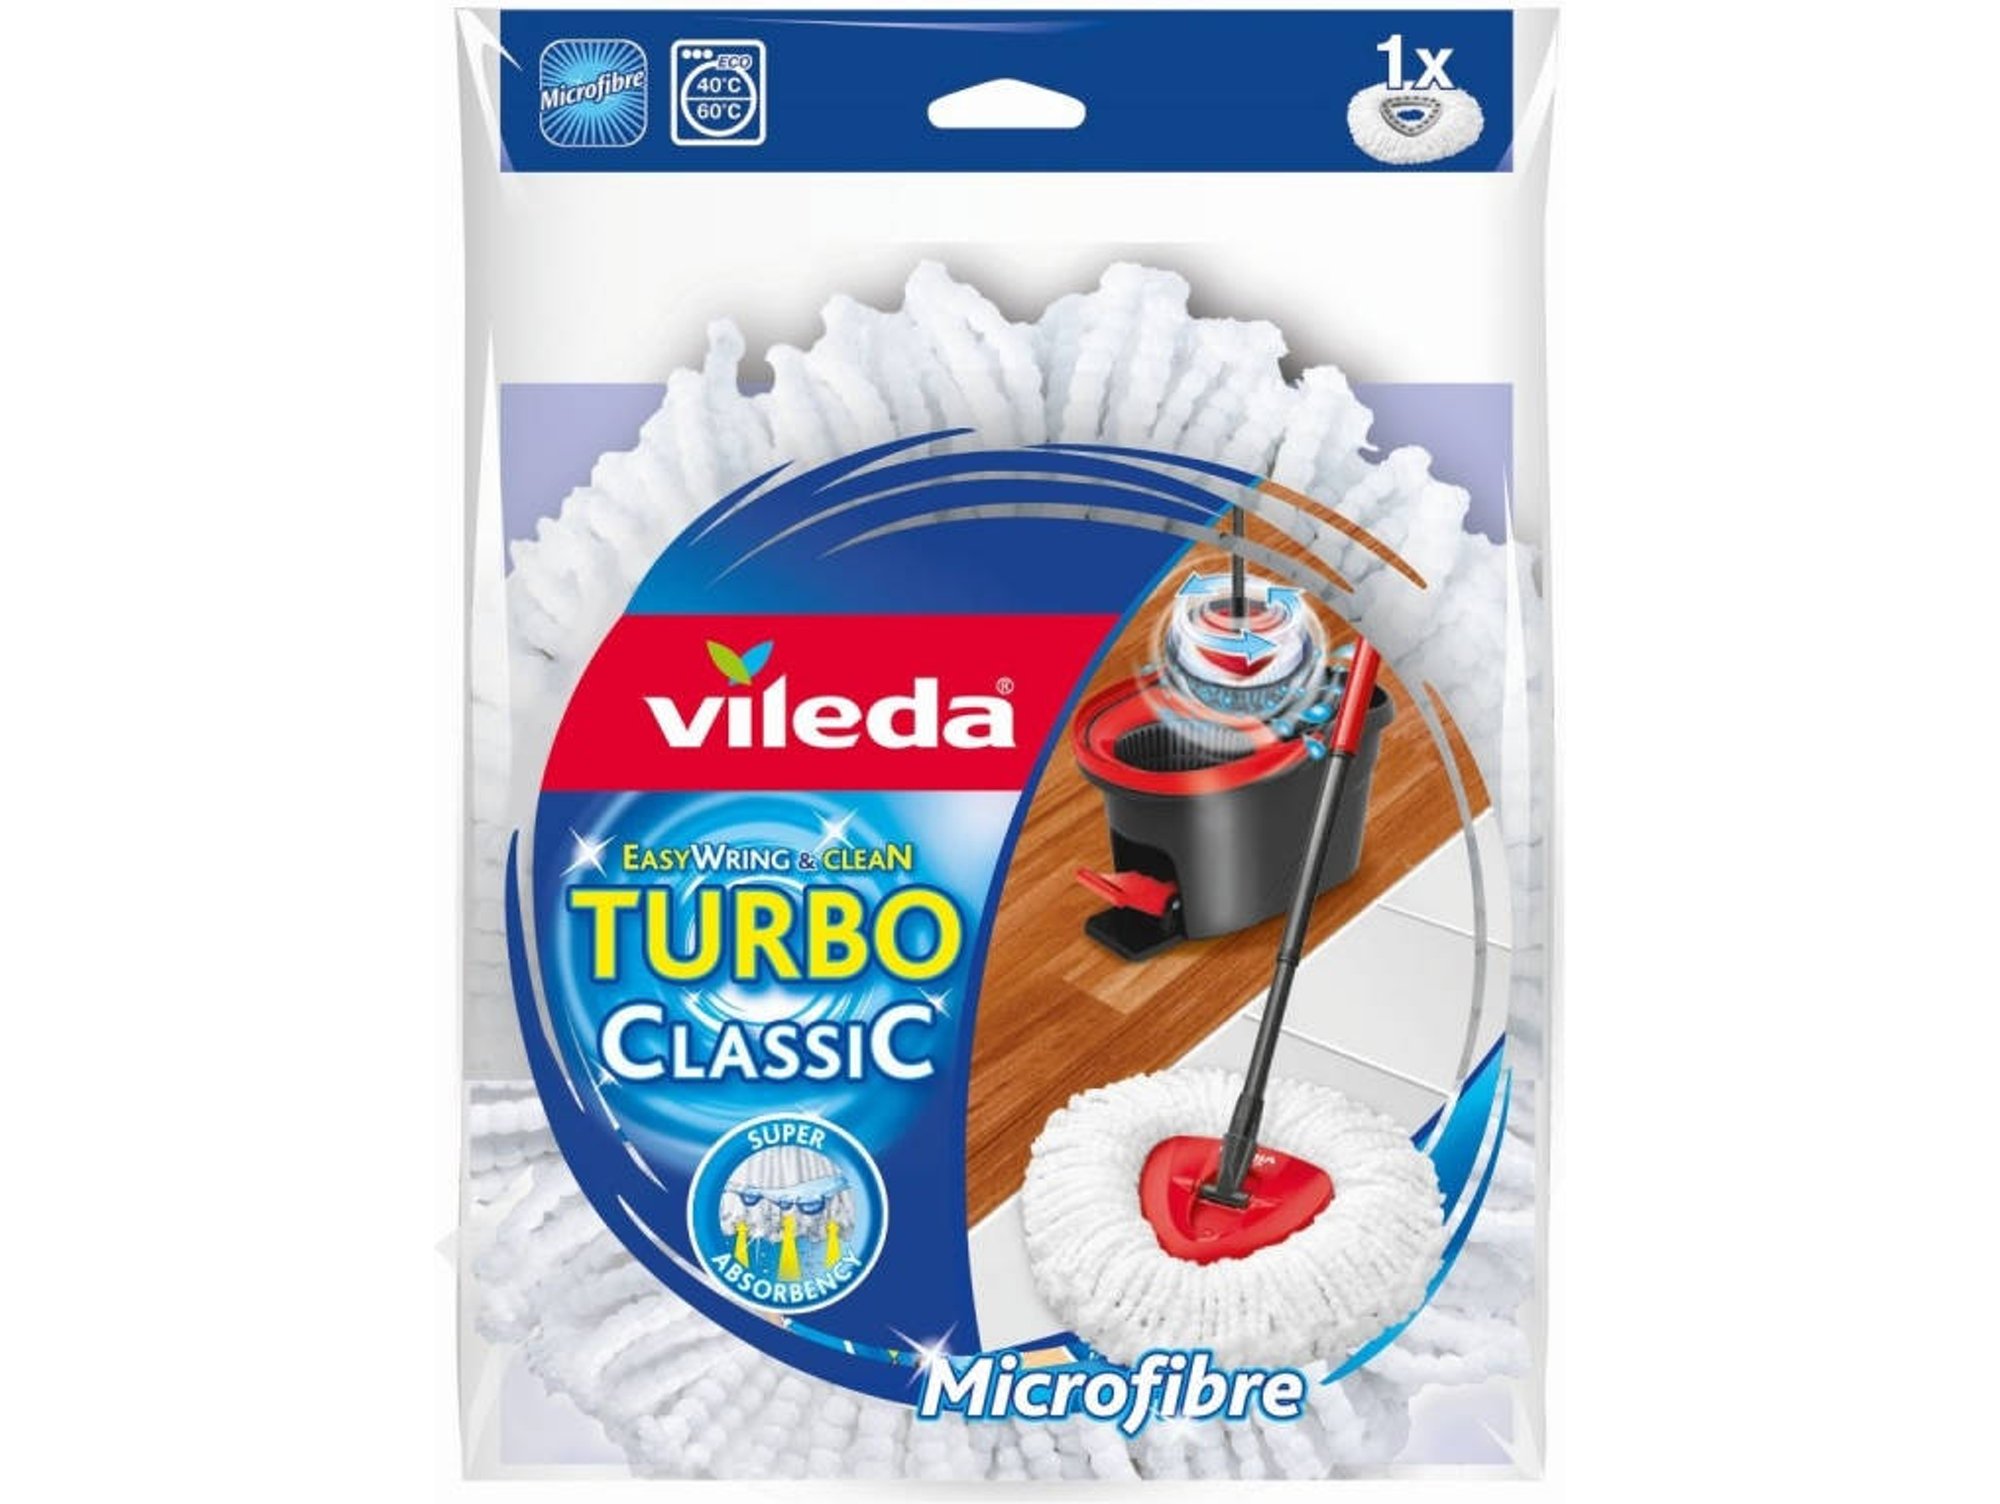 Fregona VILEDA Turbo Classic